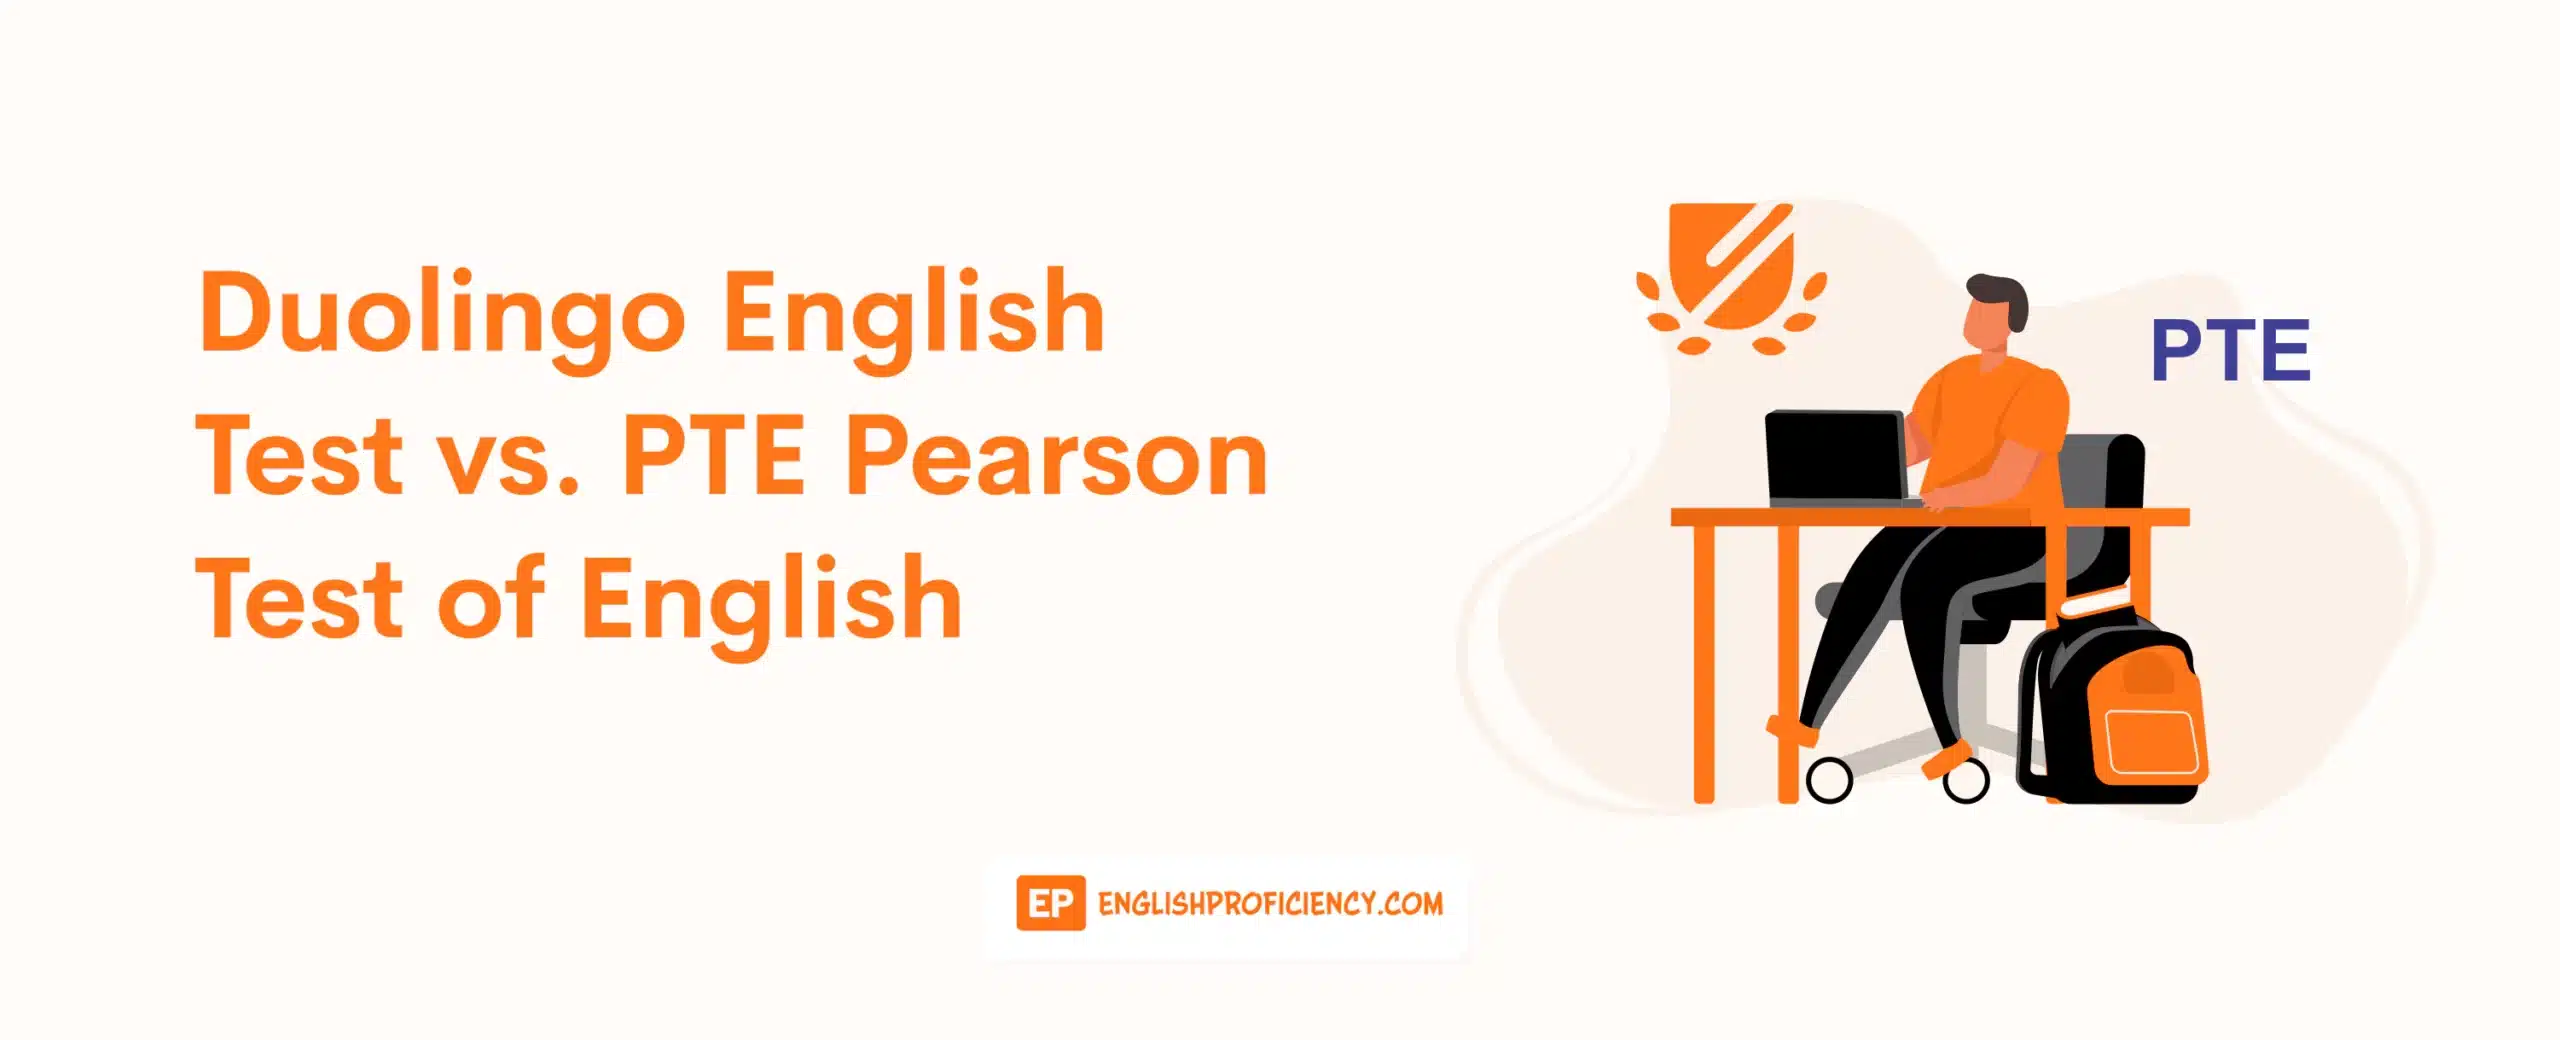 Duolingo English Test vs. PTE Pearson Test of English